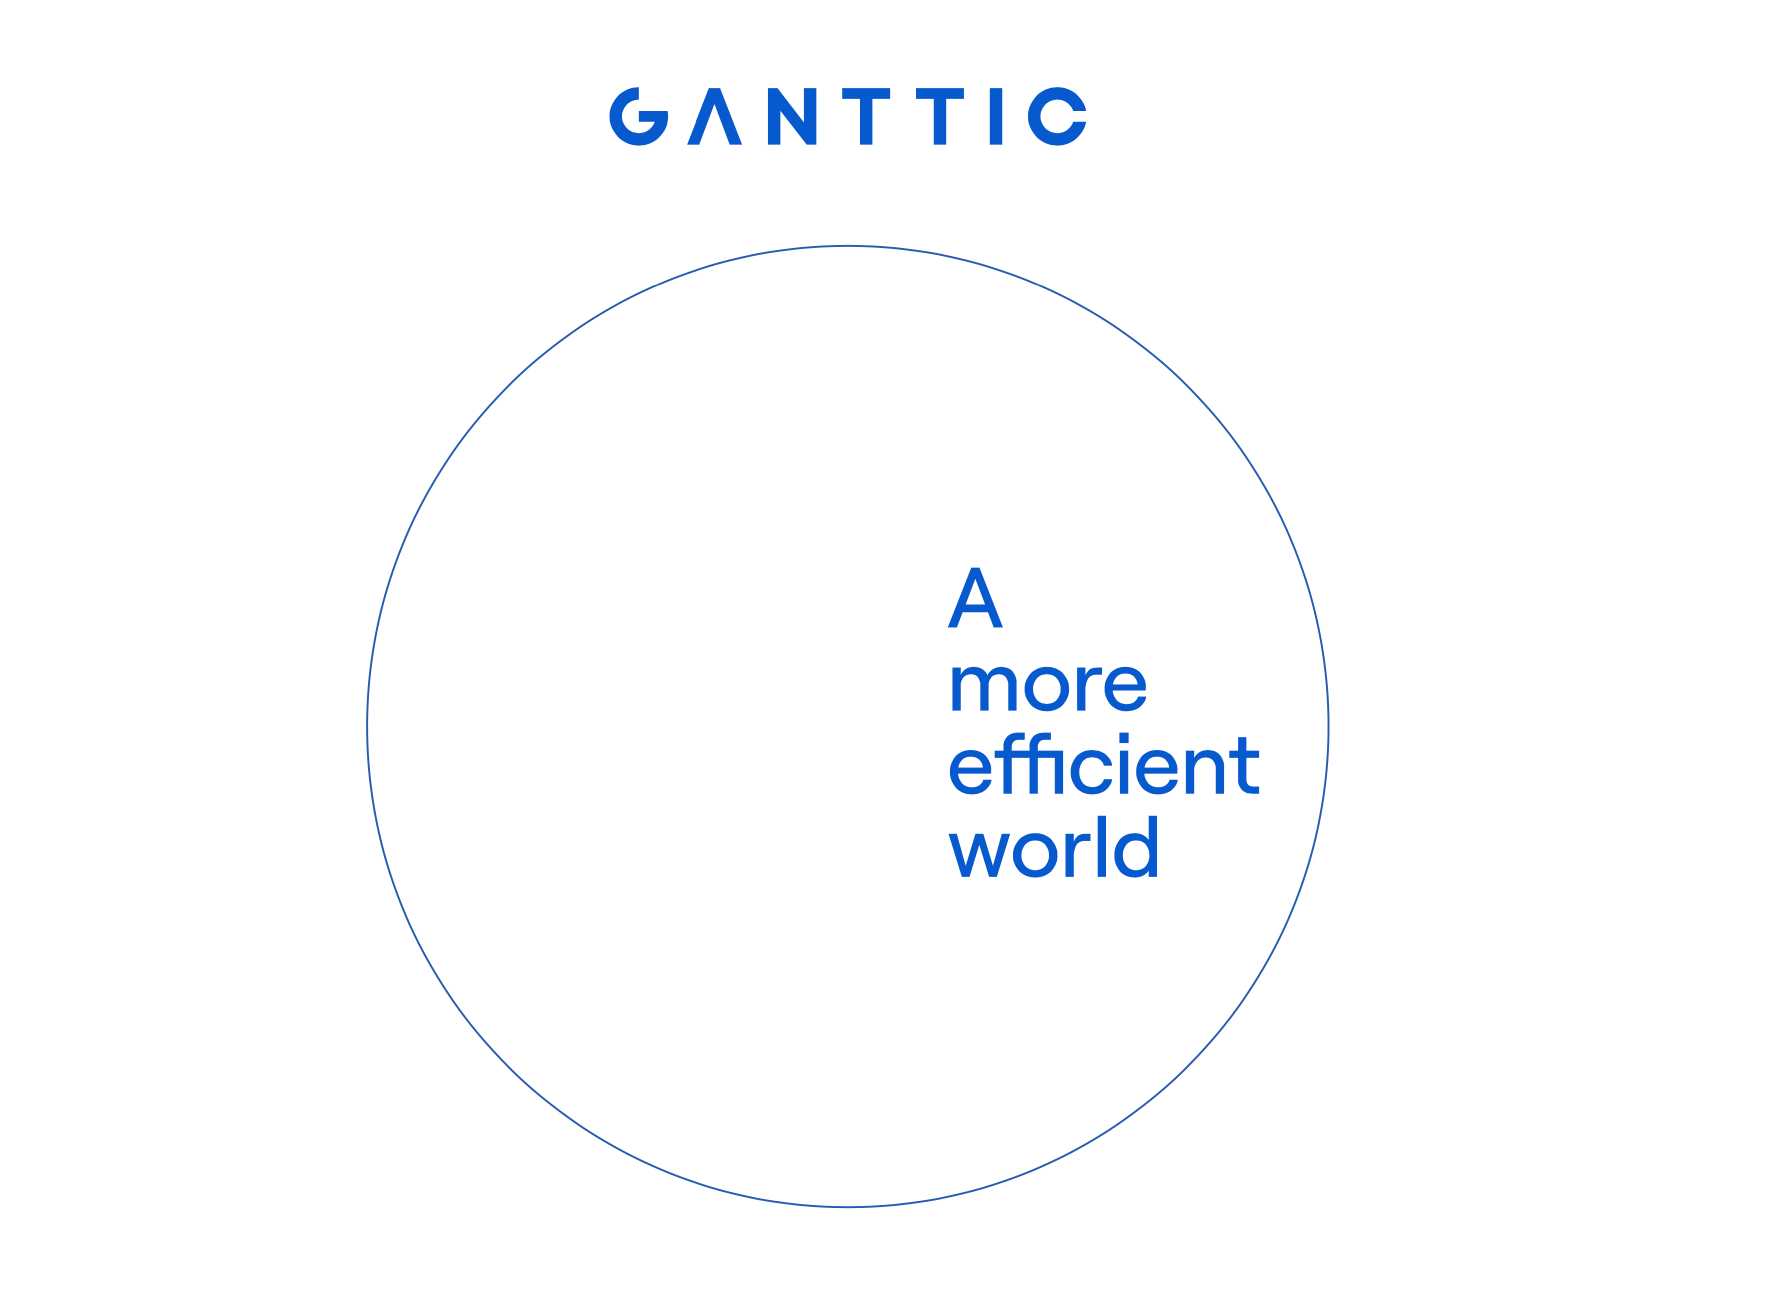 Ganttic slogan: "A more efficient world"